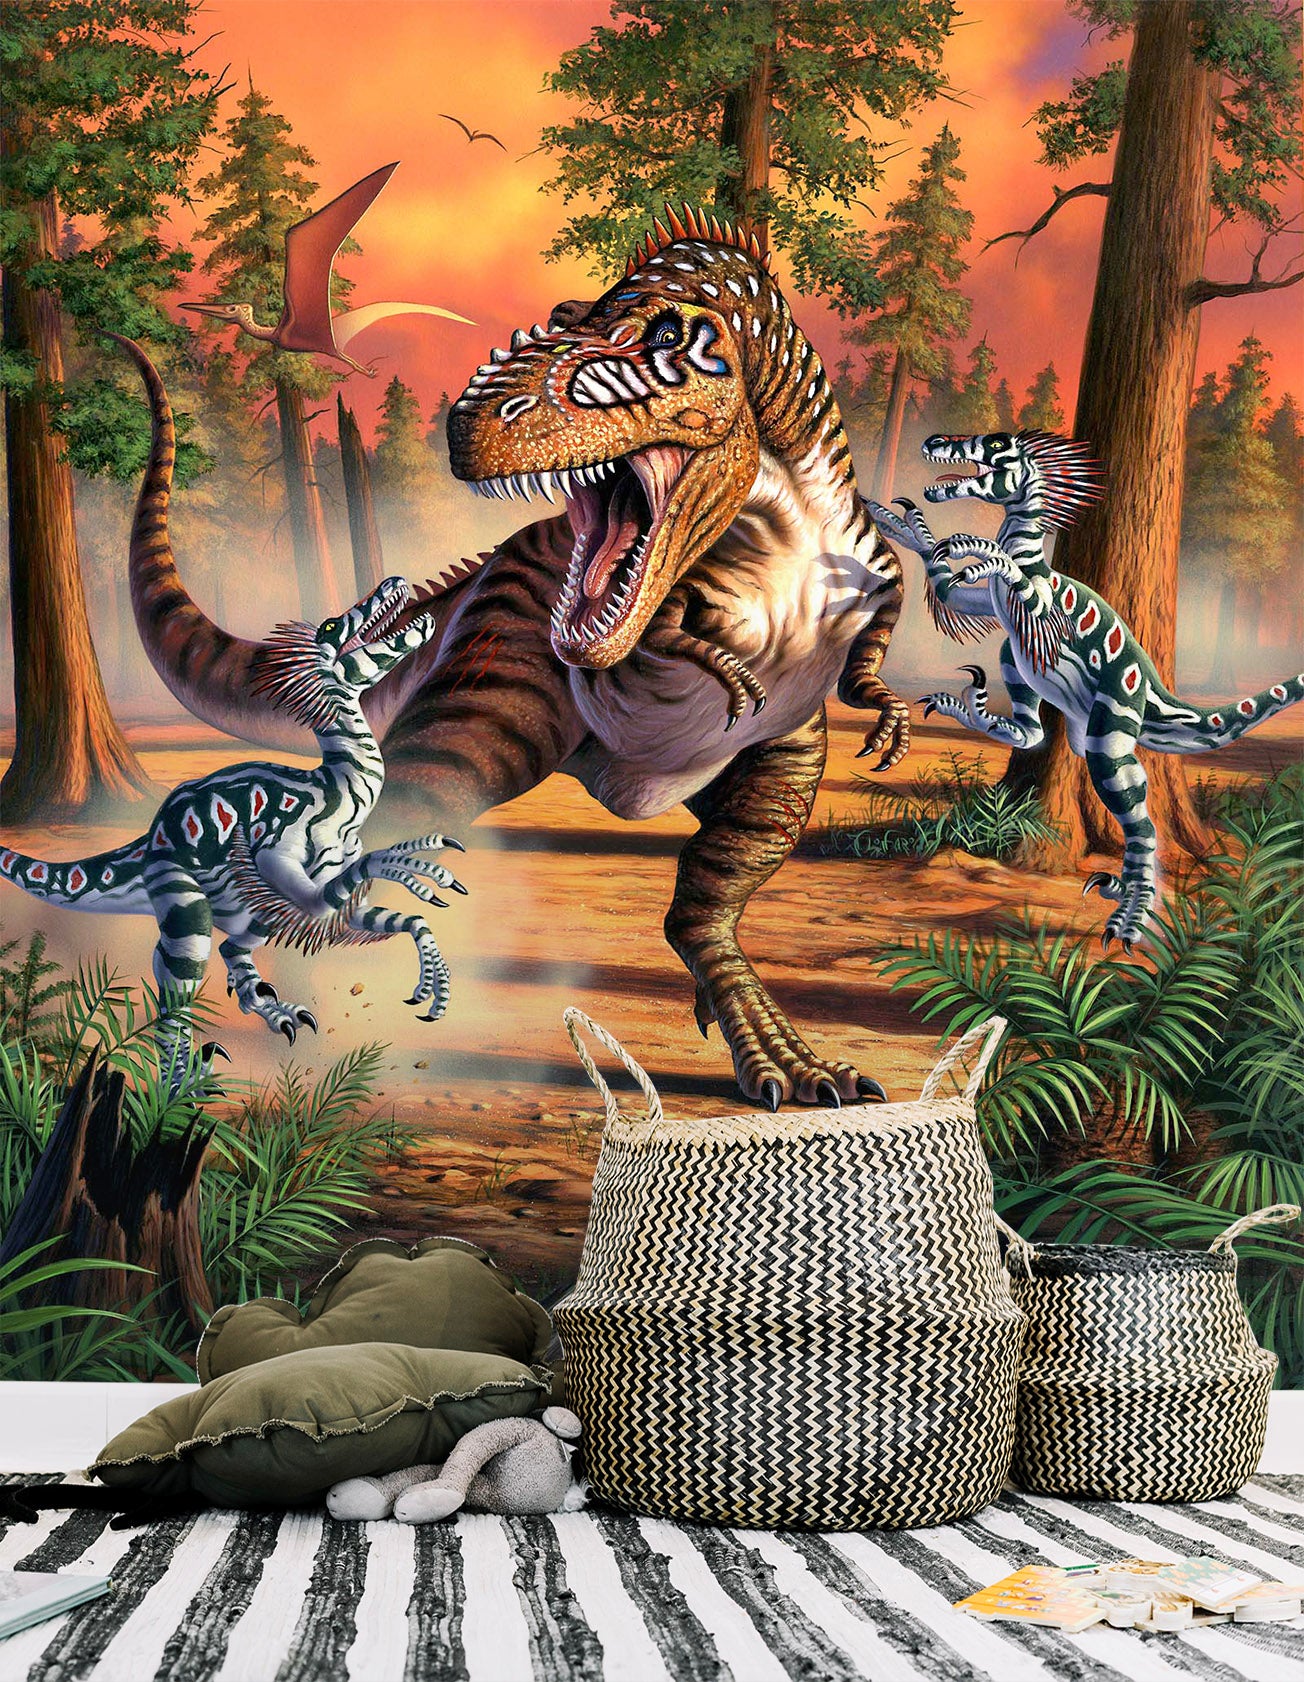 3D Dino Battle 1406 Jerry LoFaro Wall Mural Wall Murals